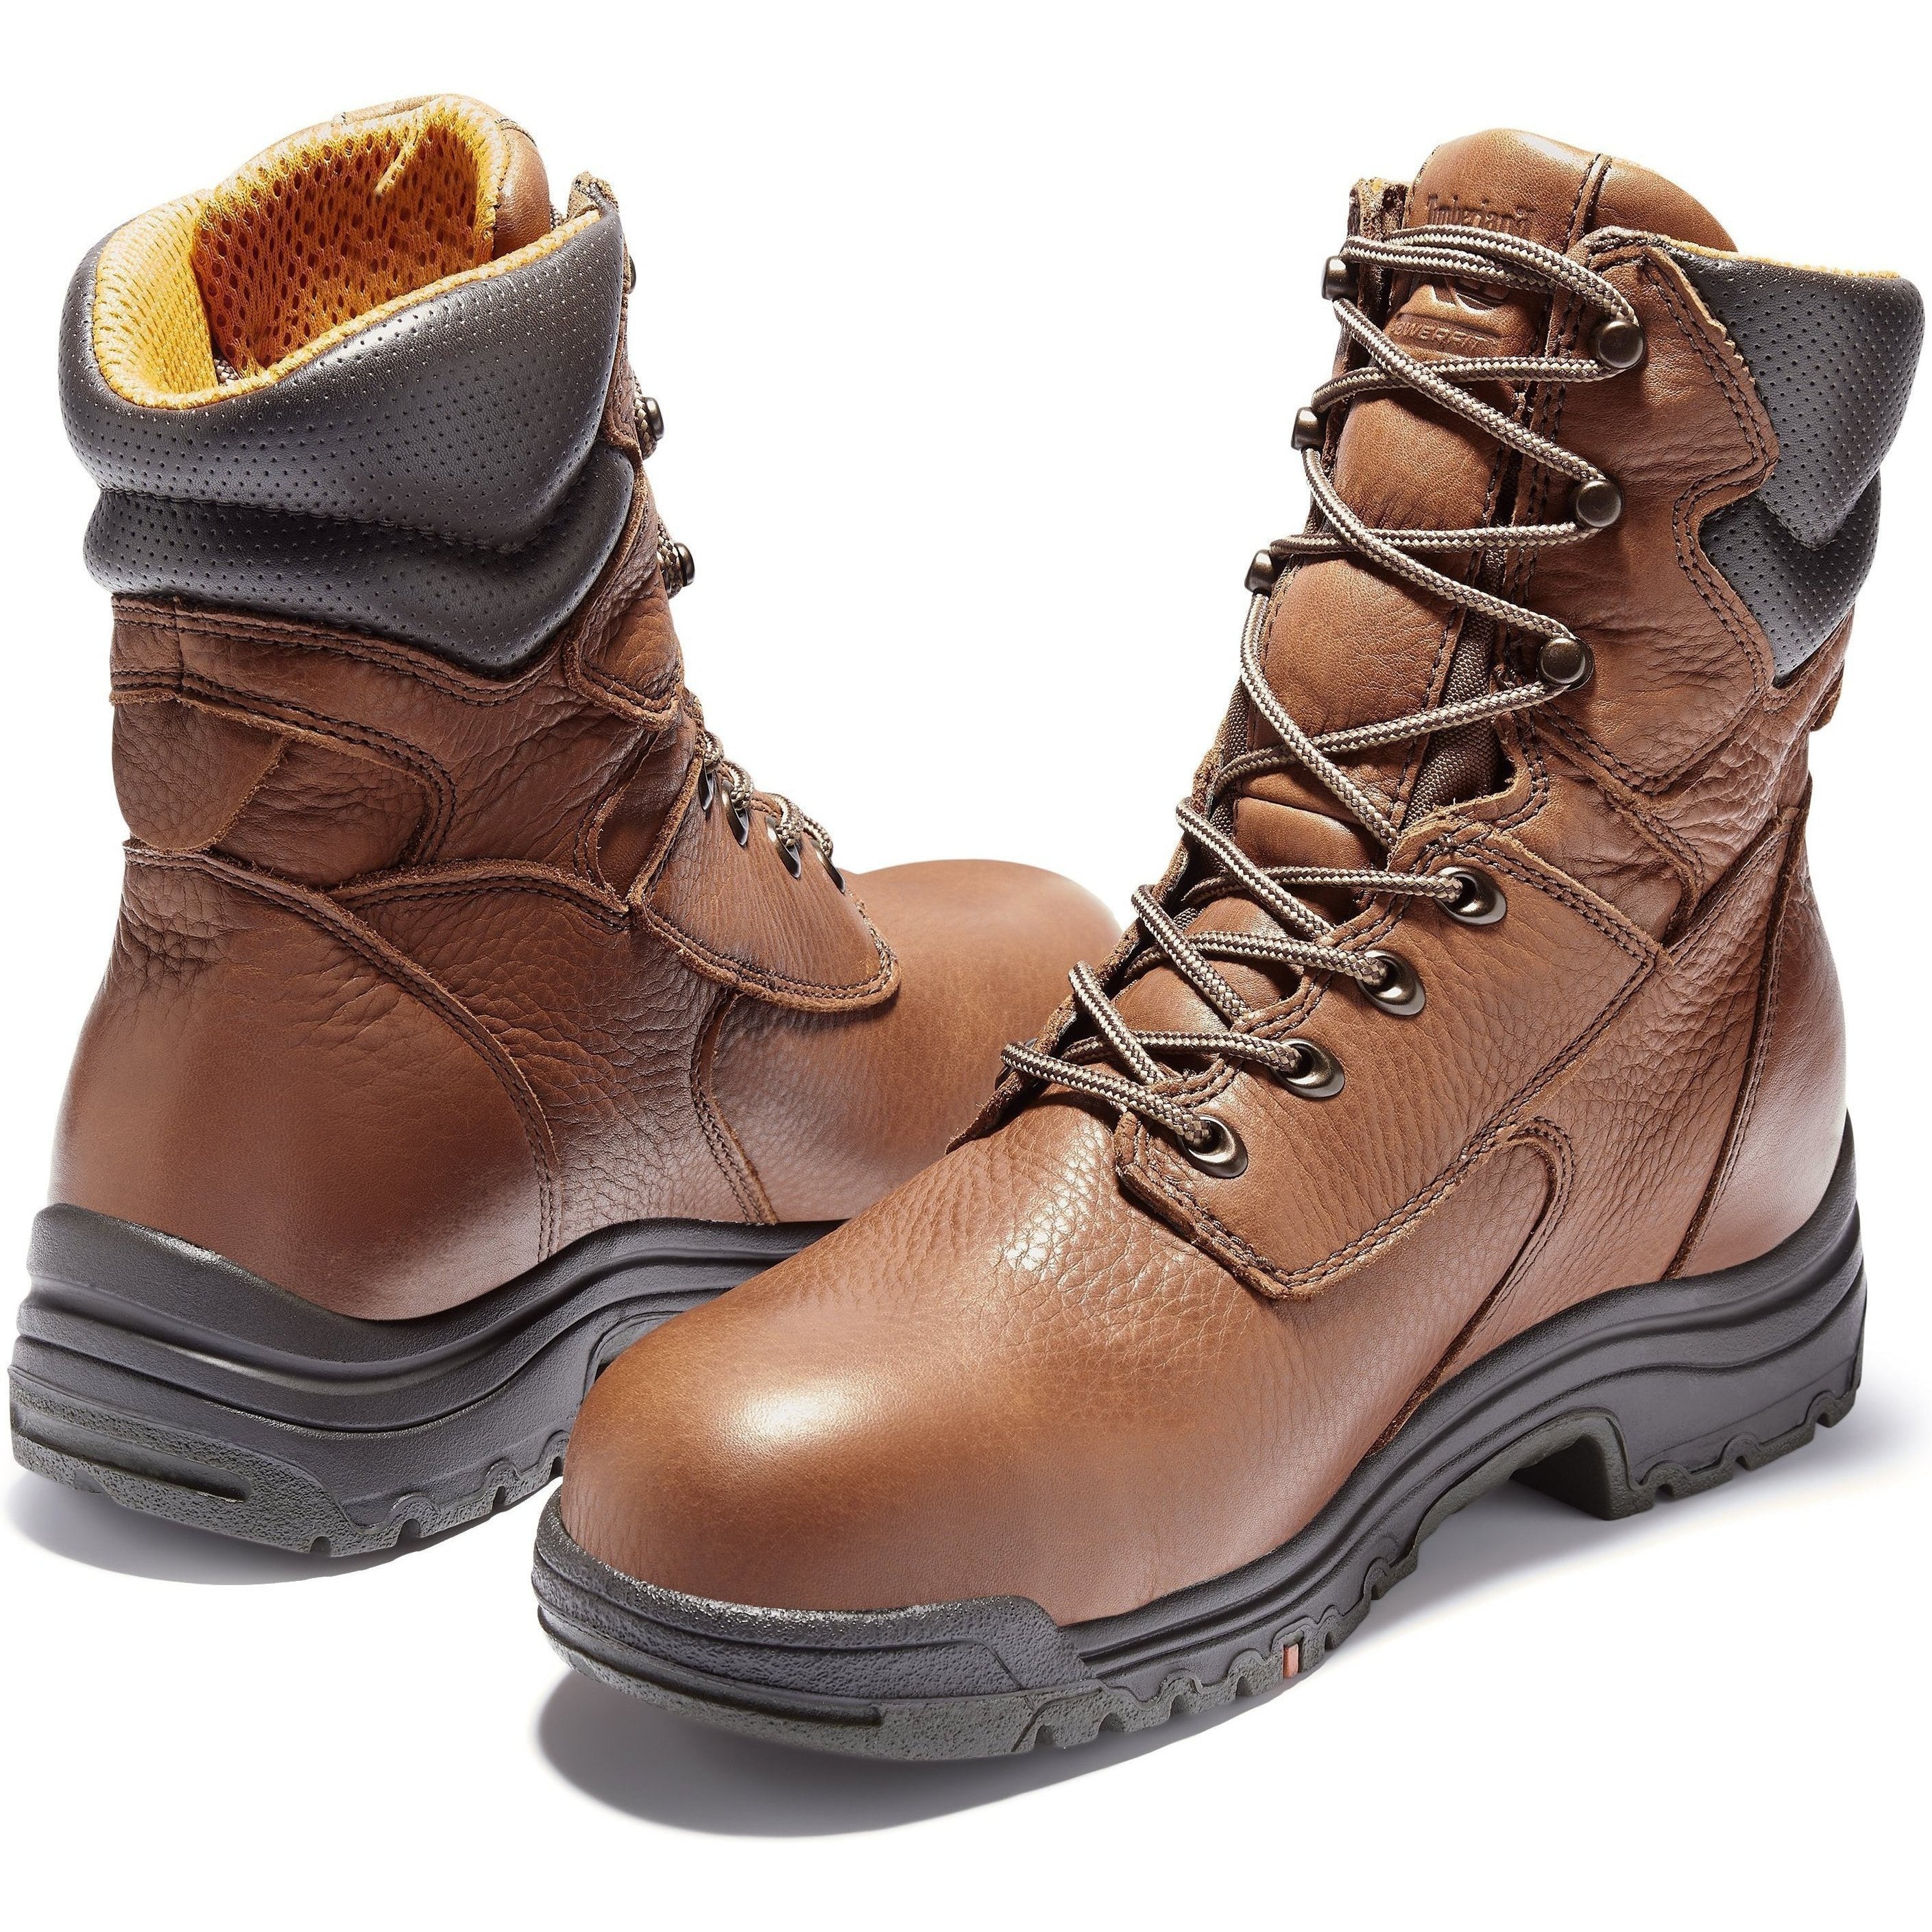 Timberland PRO Men's TiTAN 8" Alloy Toe WP Work Boot Brown TB147019210  - Overlook Boots